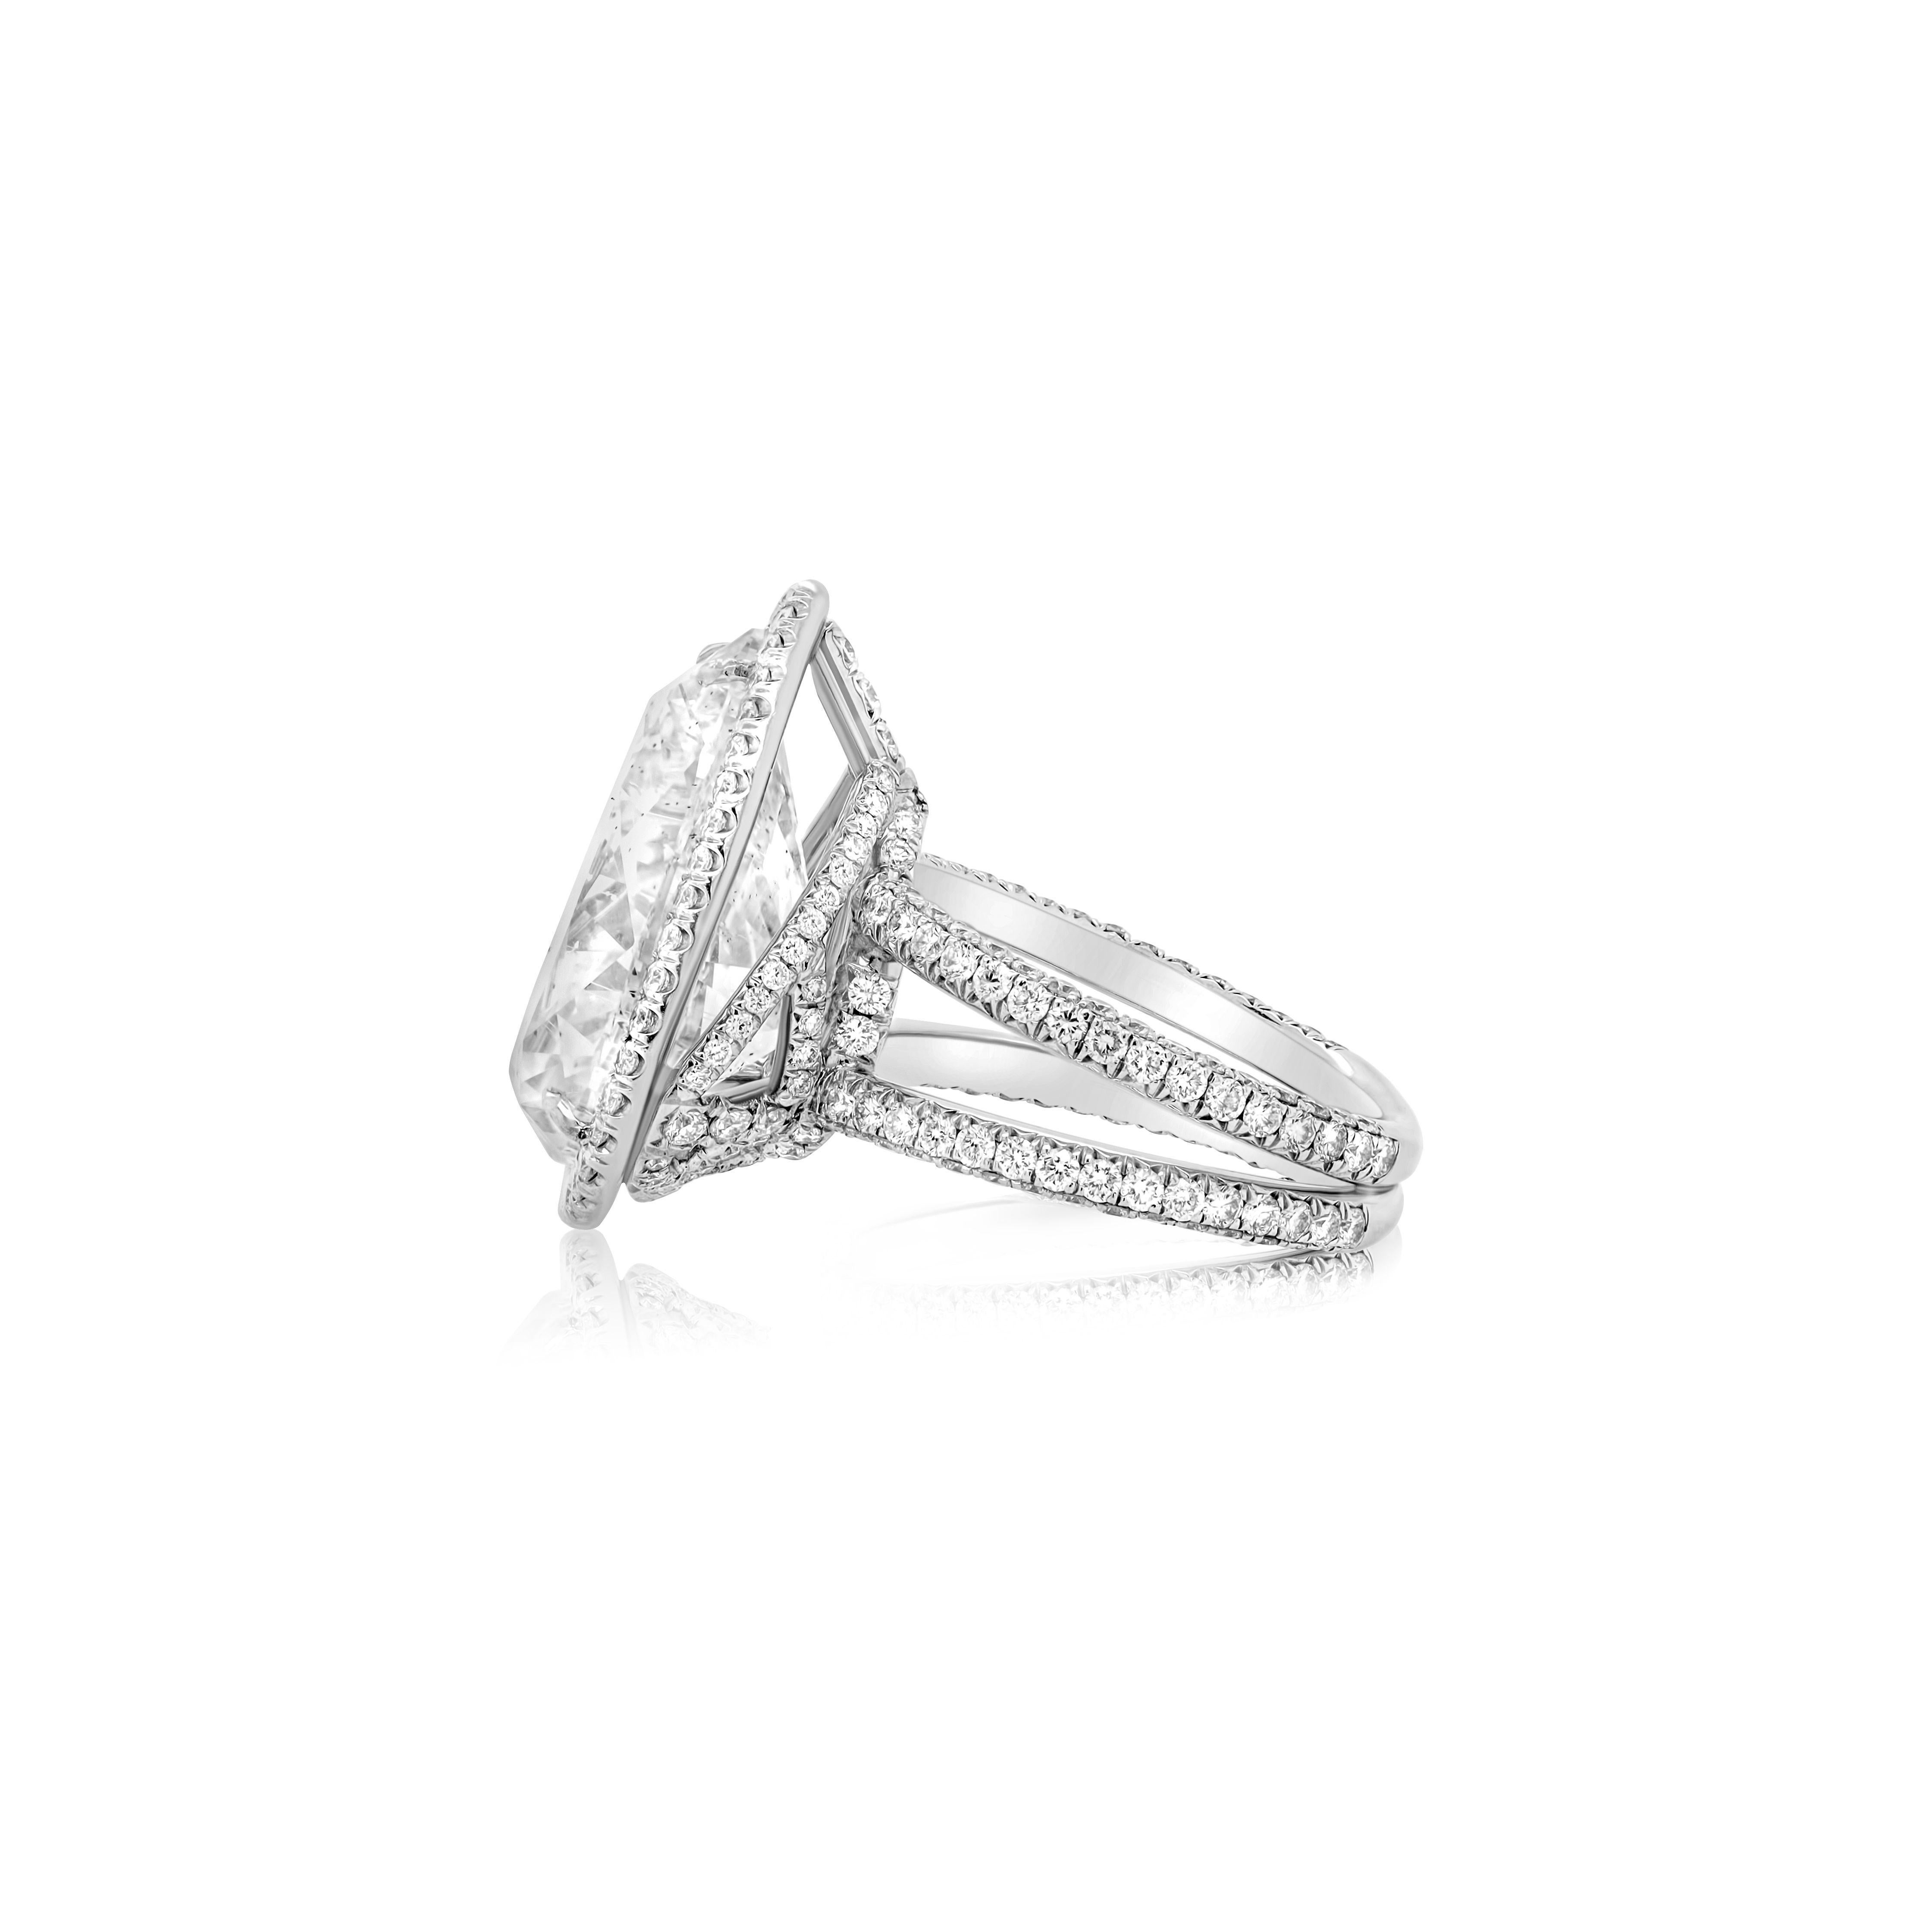 Women's Platinum Diamond Ring with Pear Shape Diamond Center